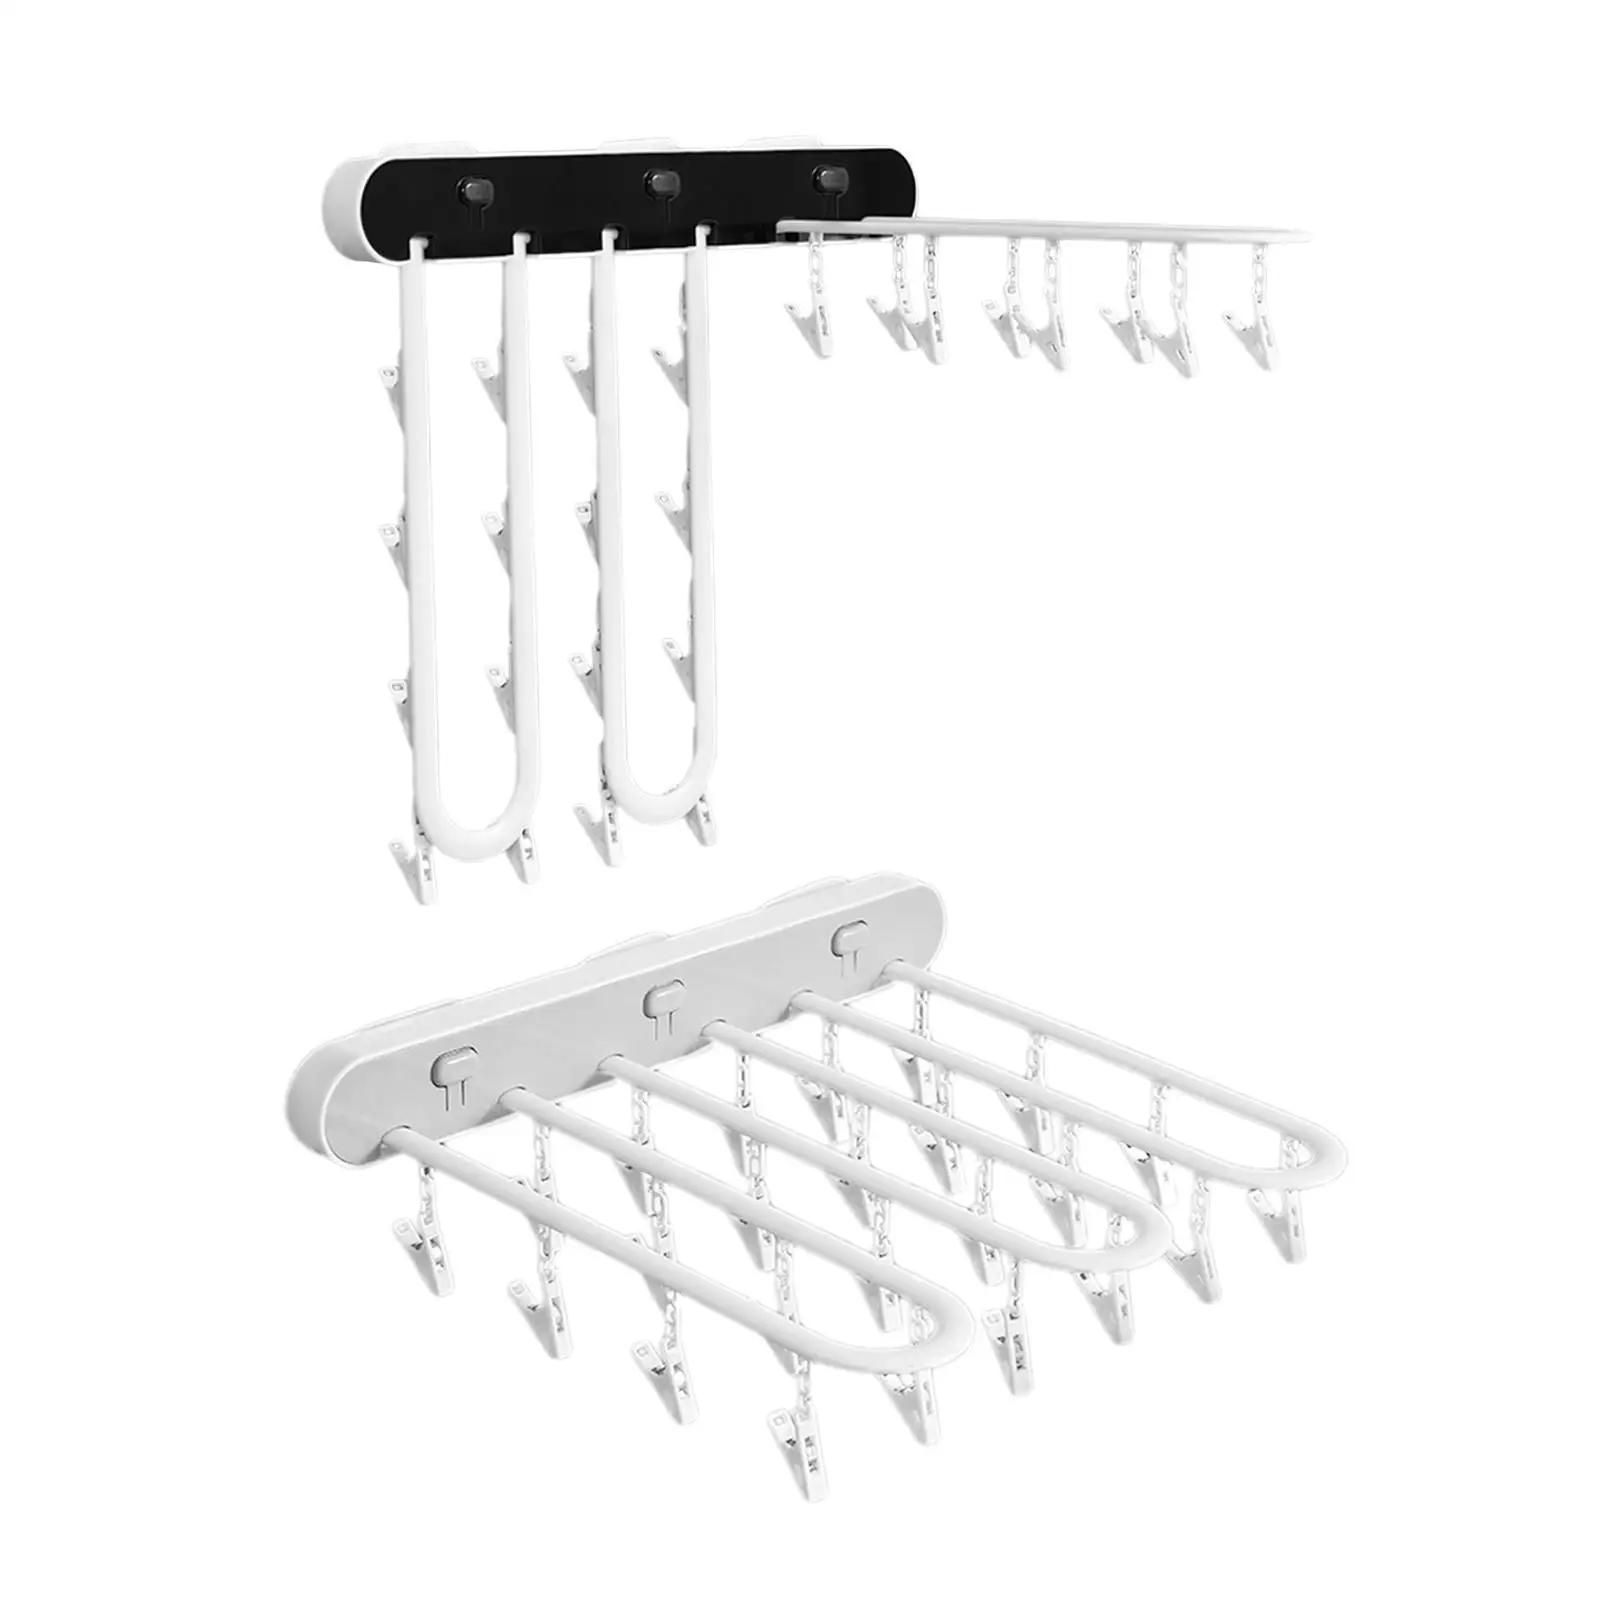 24 Clips Underwear Hanger Bra Hangers  Dryer Folding Multifunctional Drying Racks for Scarves Tank  Space-Saving